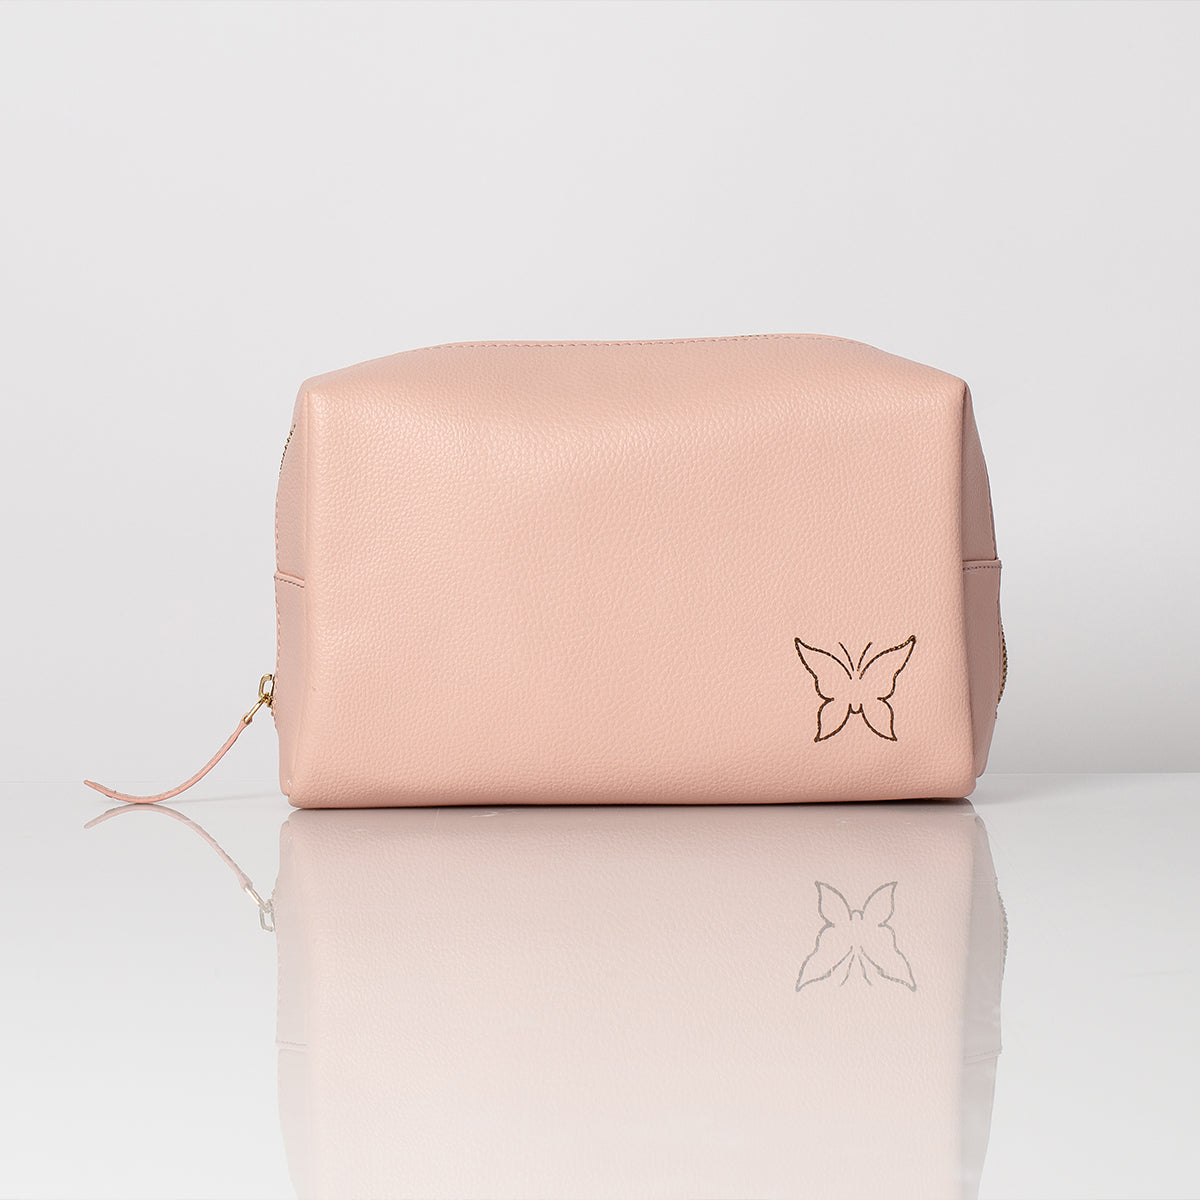 Victoria's Secret Love Vs Rhinestone Pink Travel Cosmetic Bag Makeup Beauty  Case